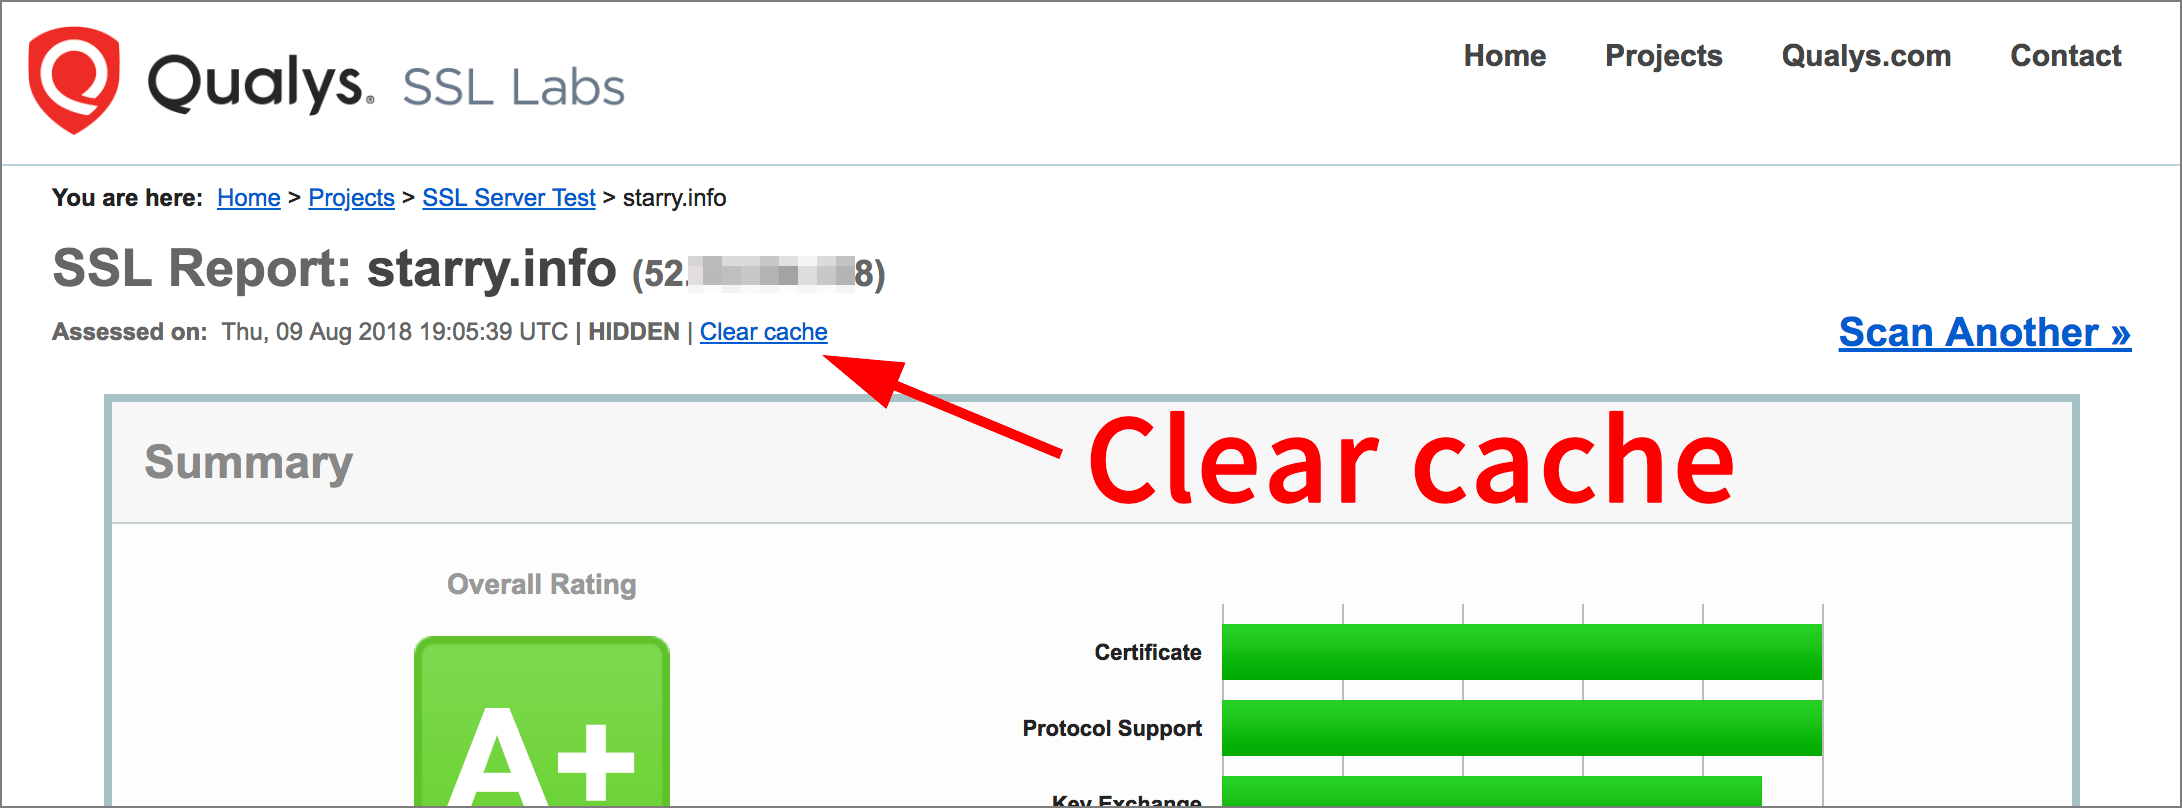 clear cache 링크 위치표시